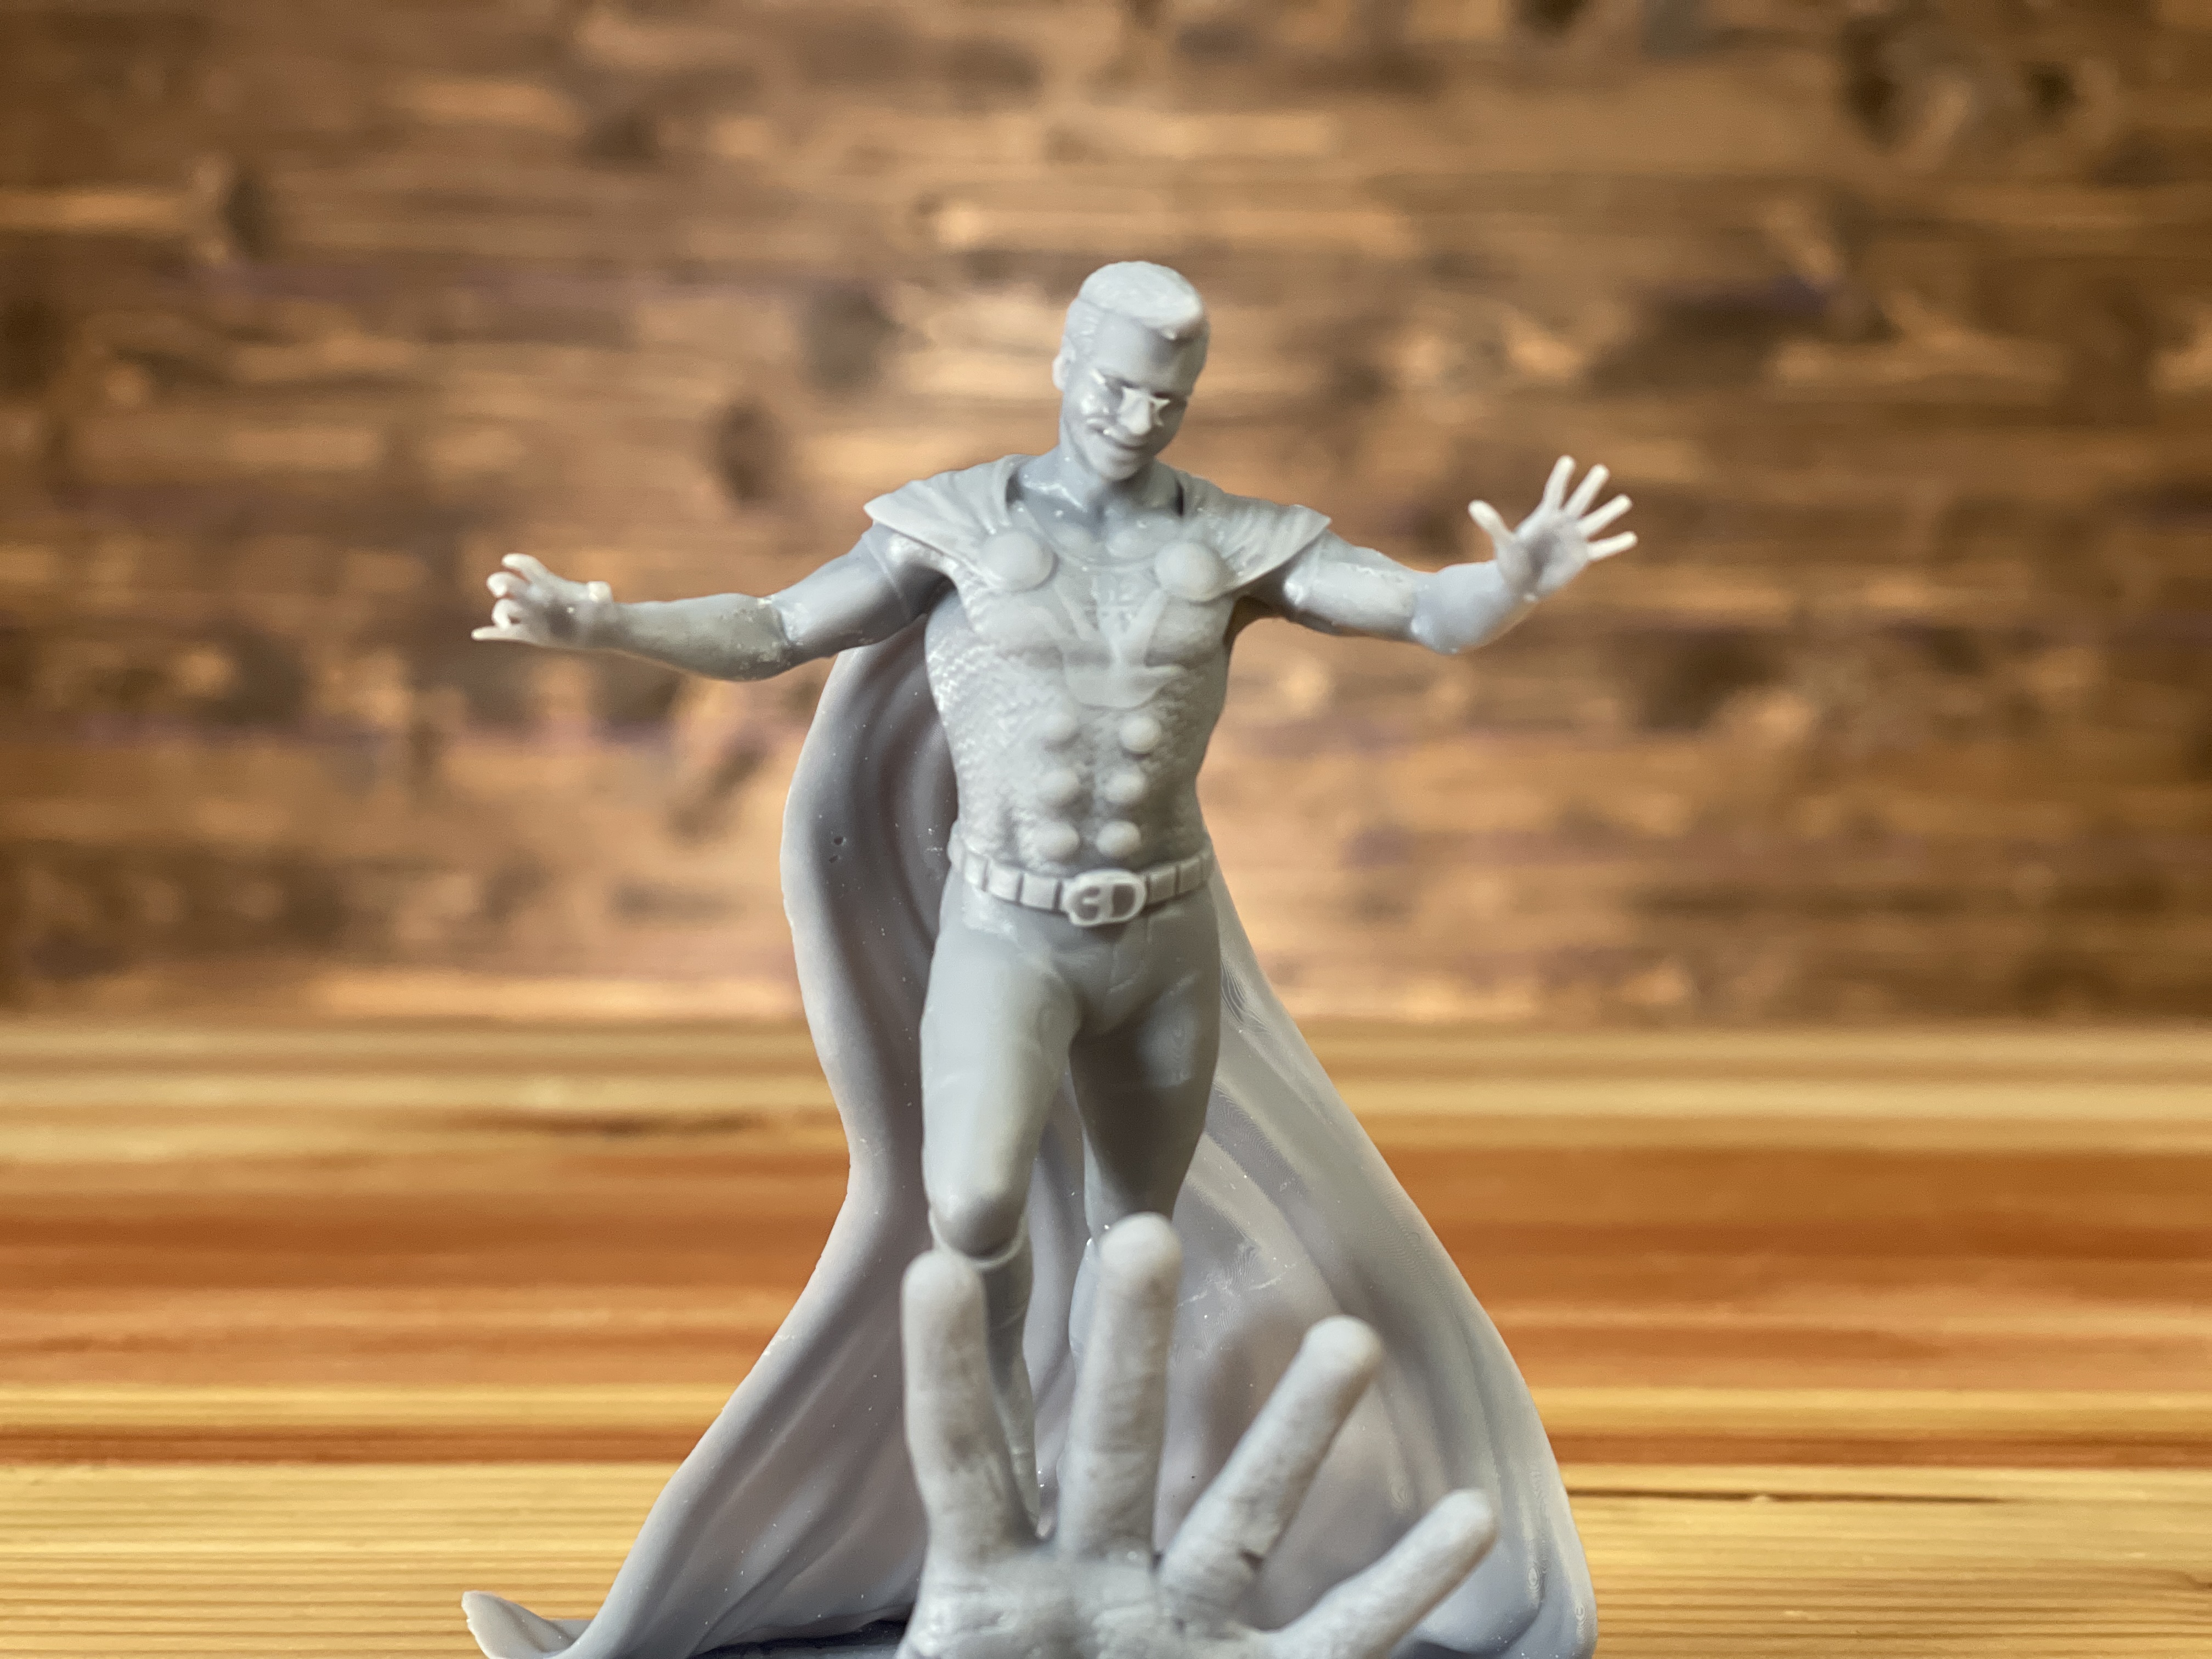 3D Printing Nerd "Make Me a Super Hero" by schonhoff